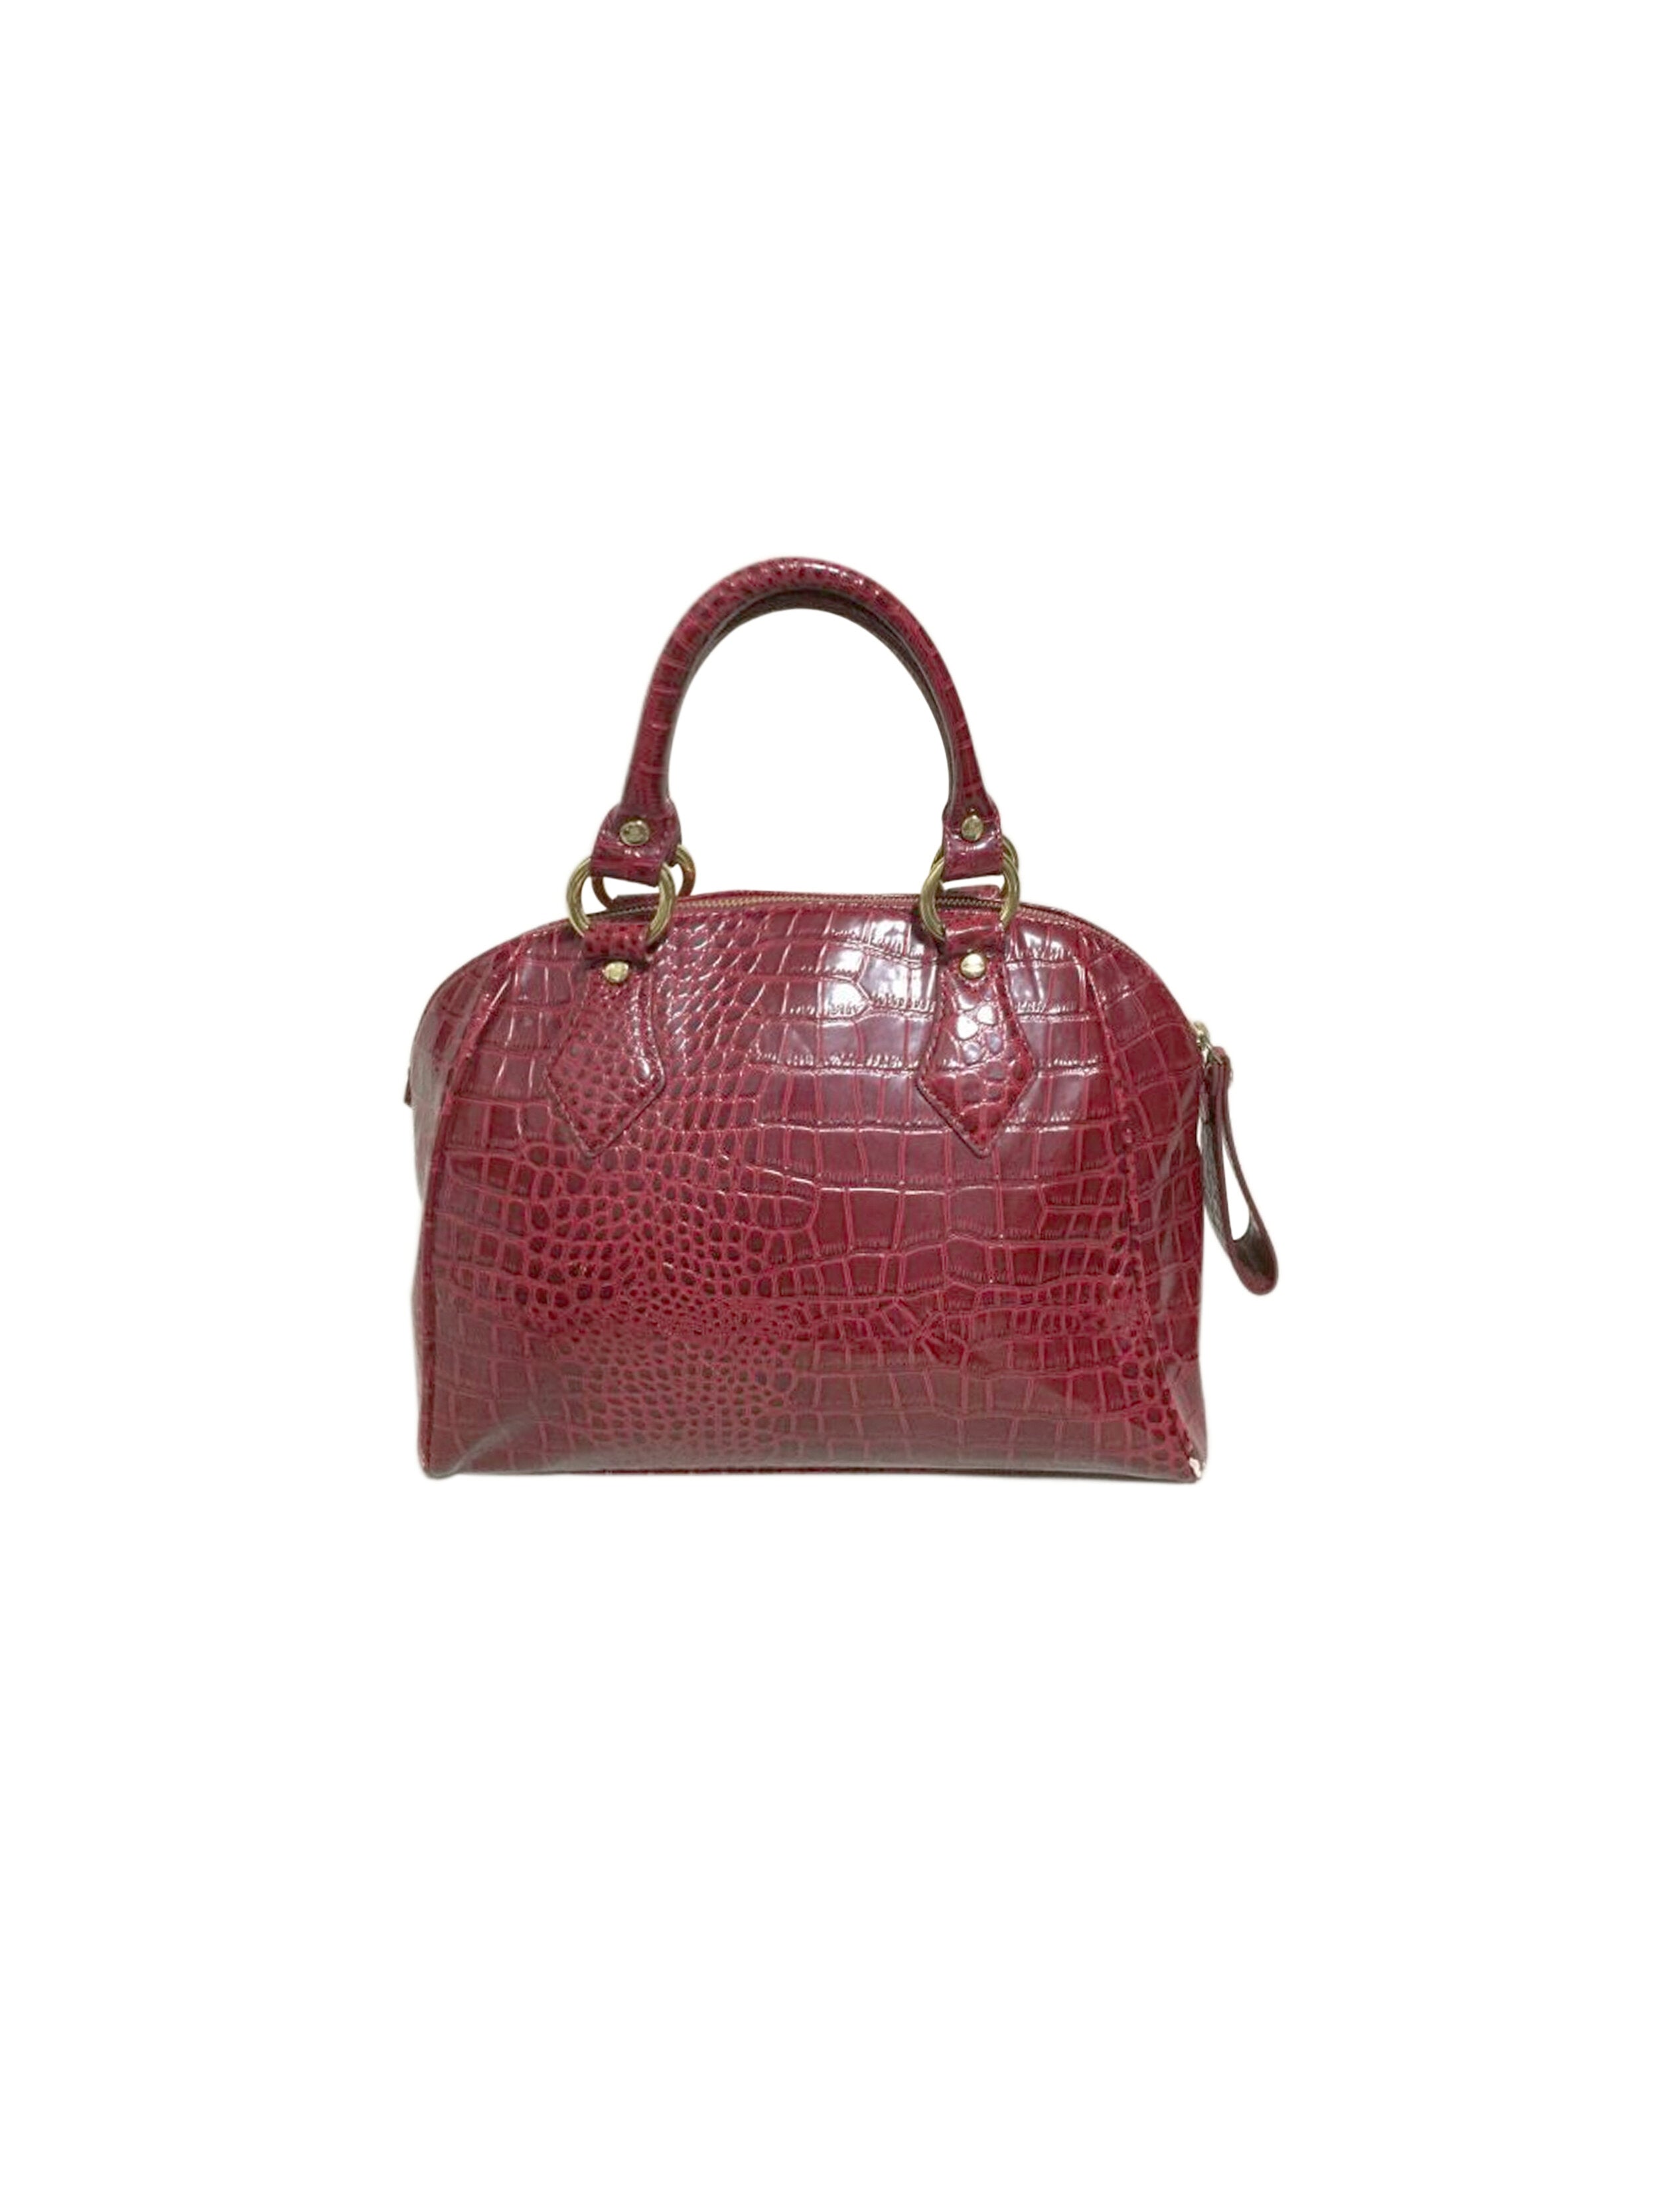 Vivienne Westwood 2000s Red Leather Handbag · INTO